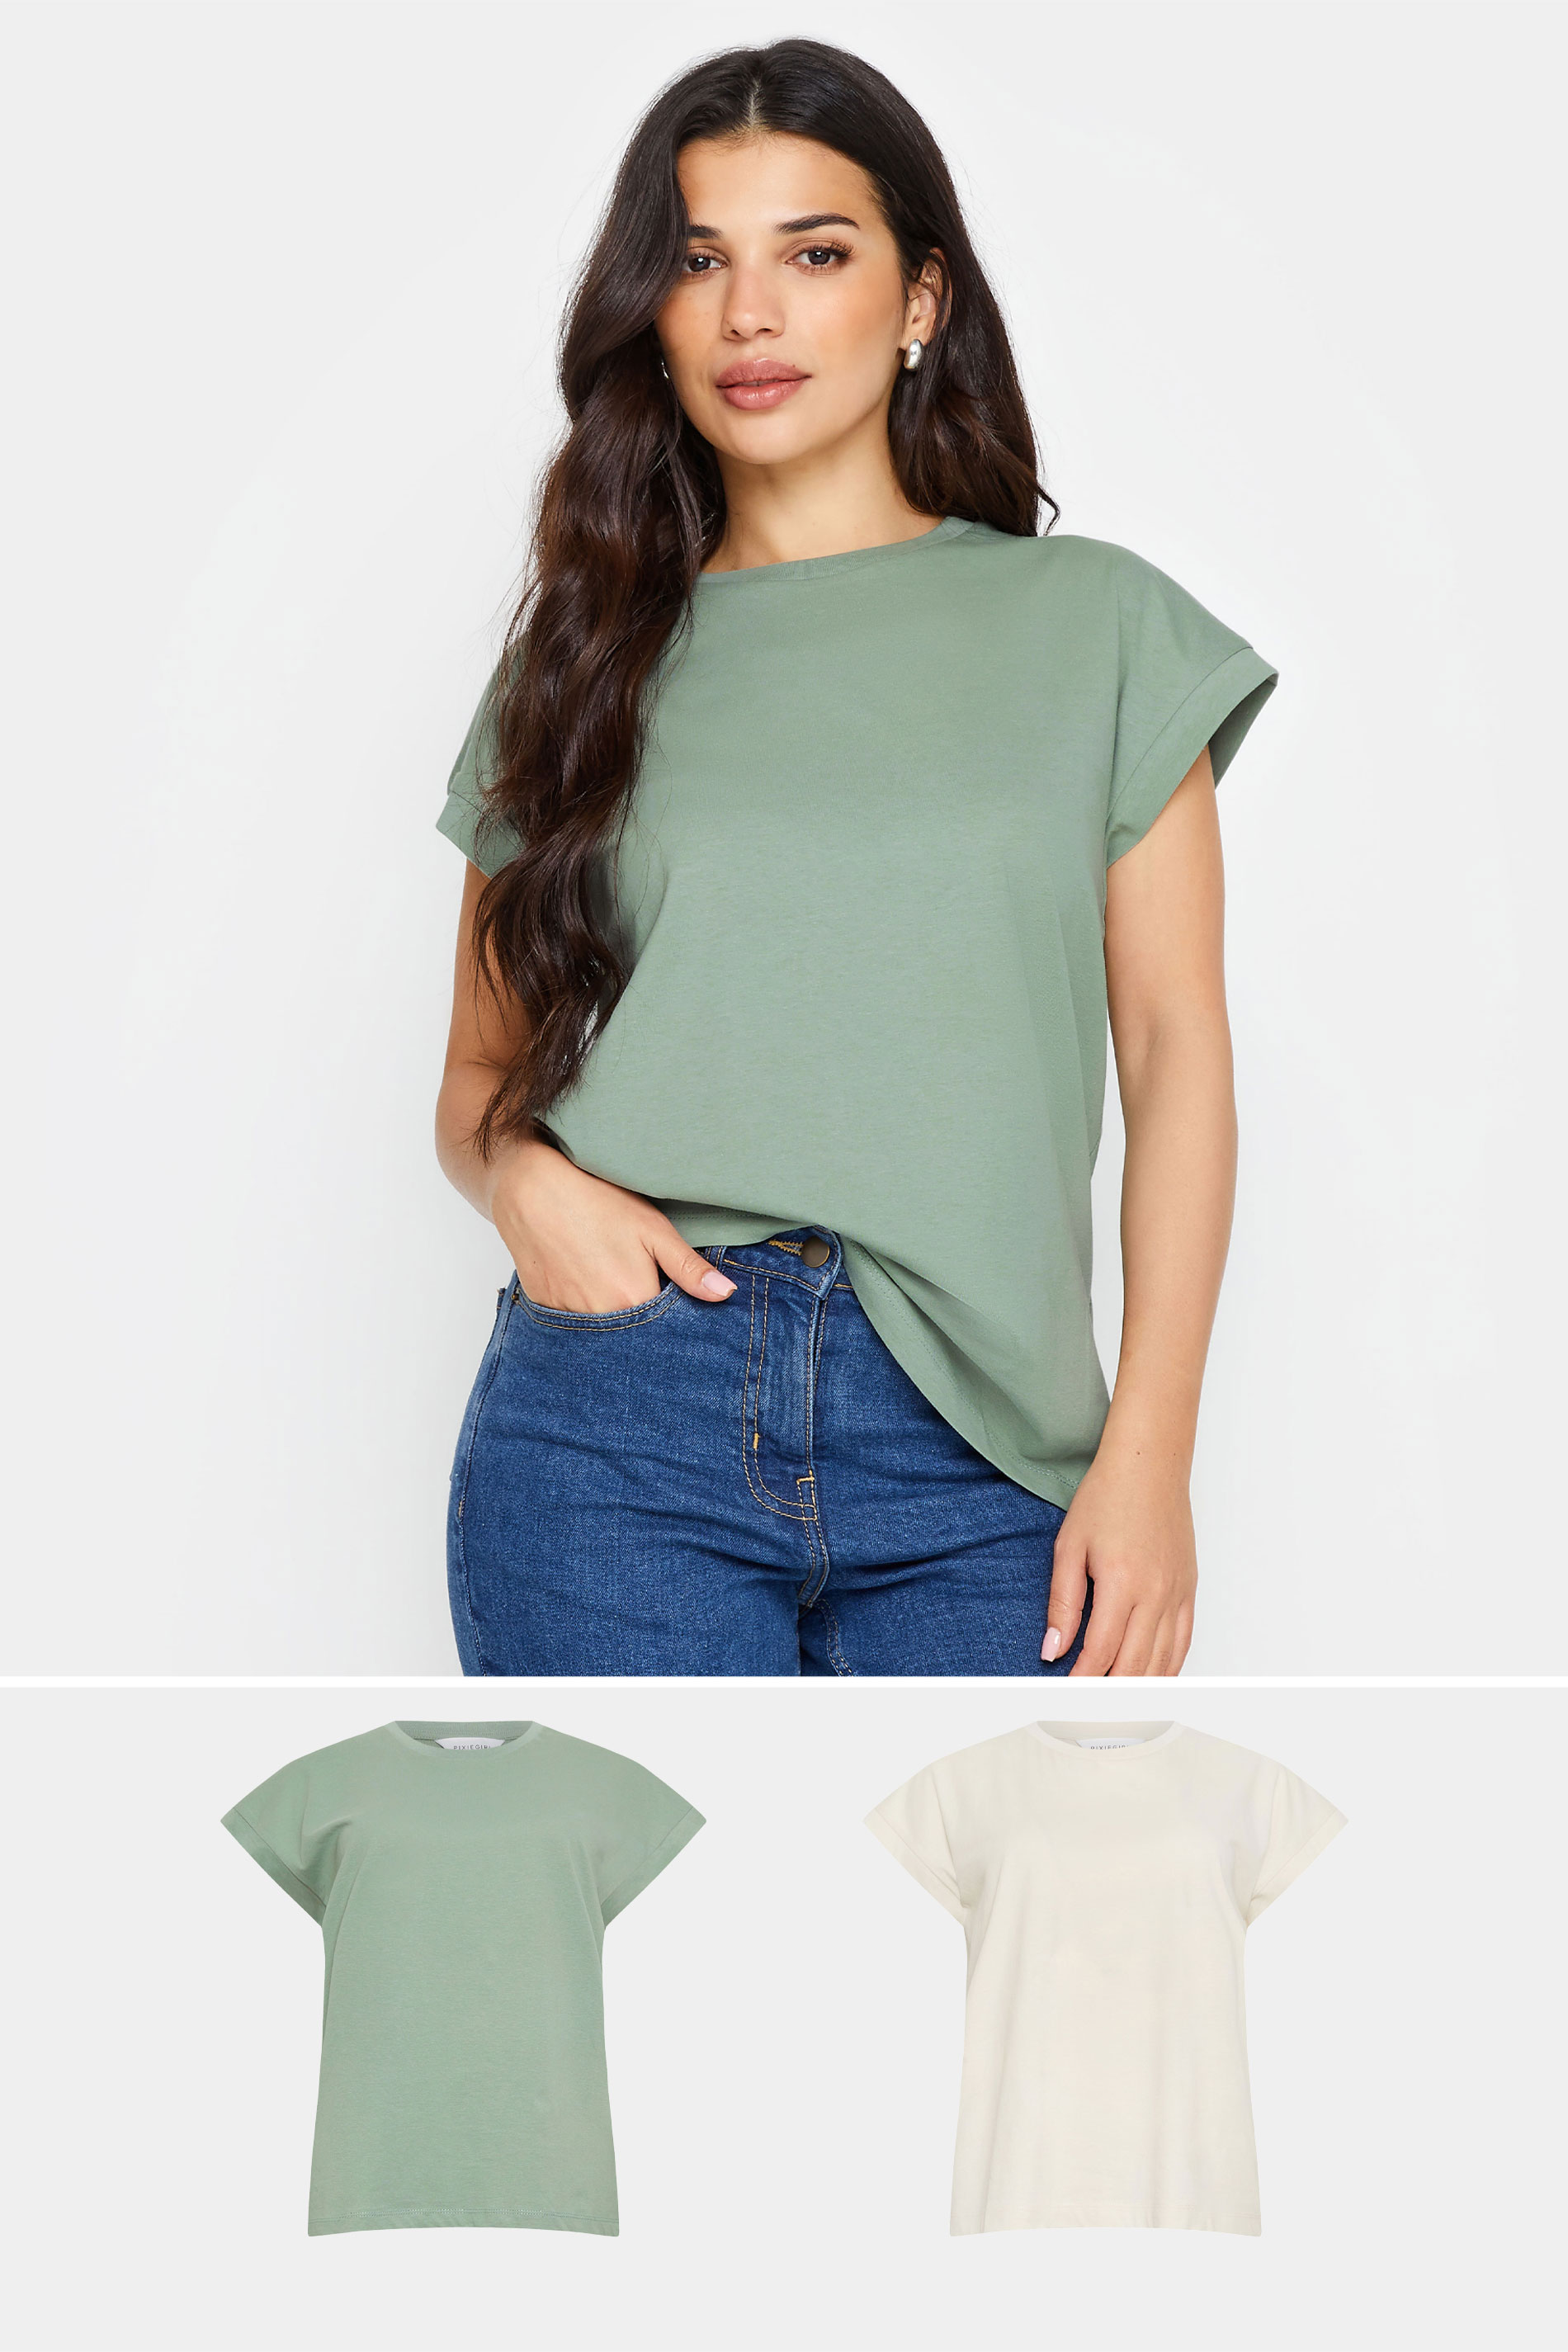 PixieGirl 2 PACK Petite Women's Sage Green & Cream Short Sleeve T-Shirts | PixieGirl 1